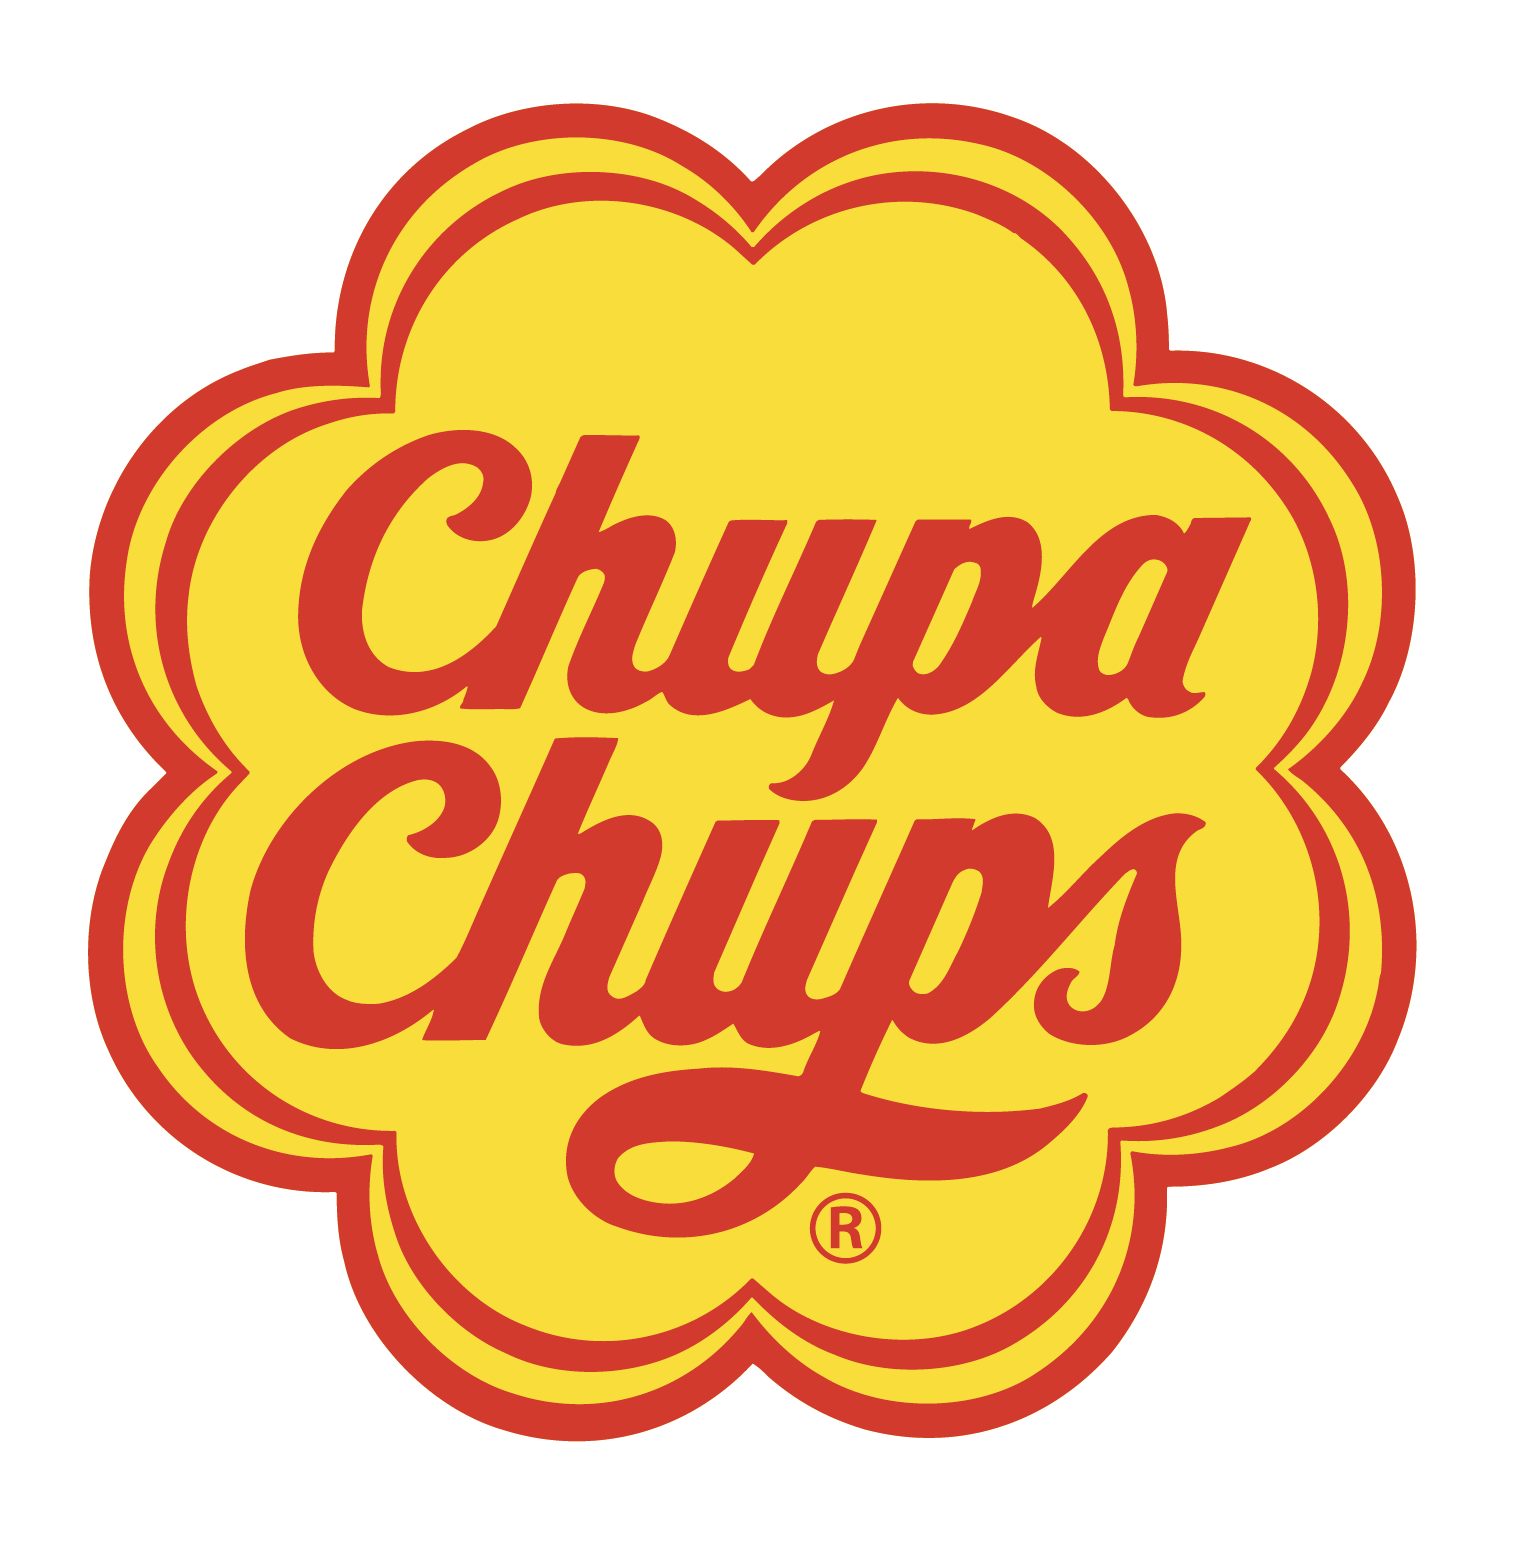 Chupa chups logo PNG прозрачное изображение